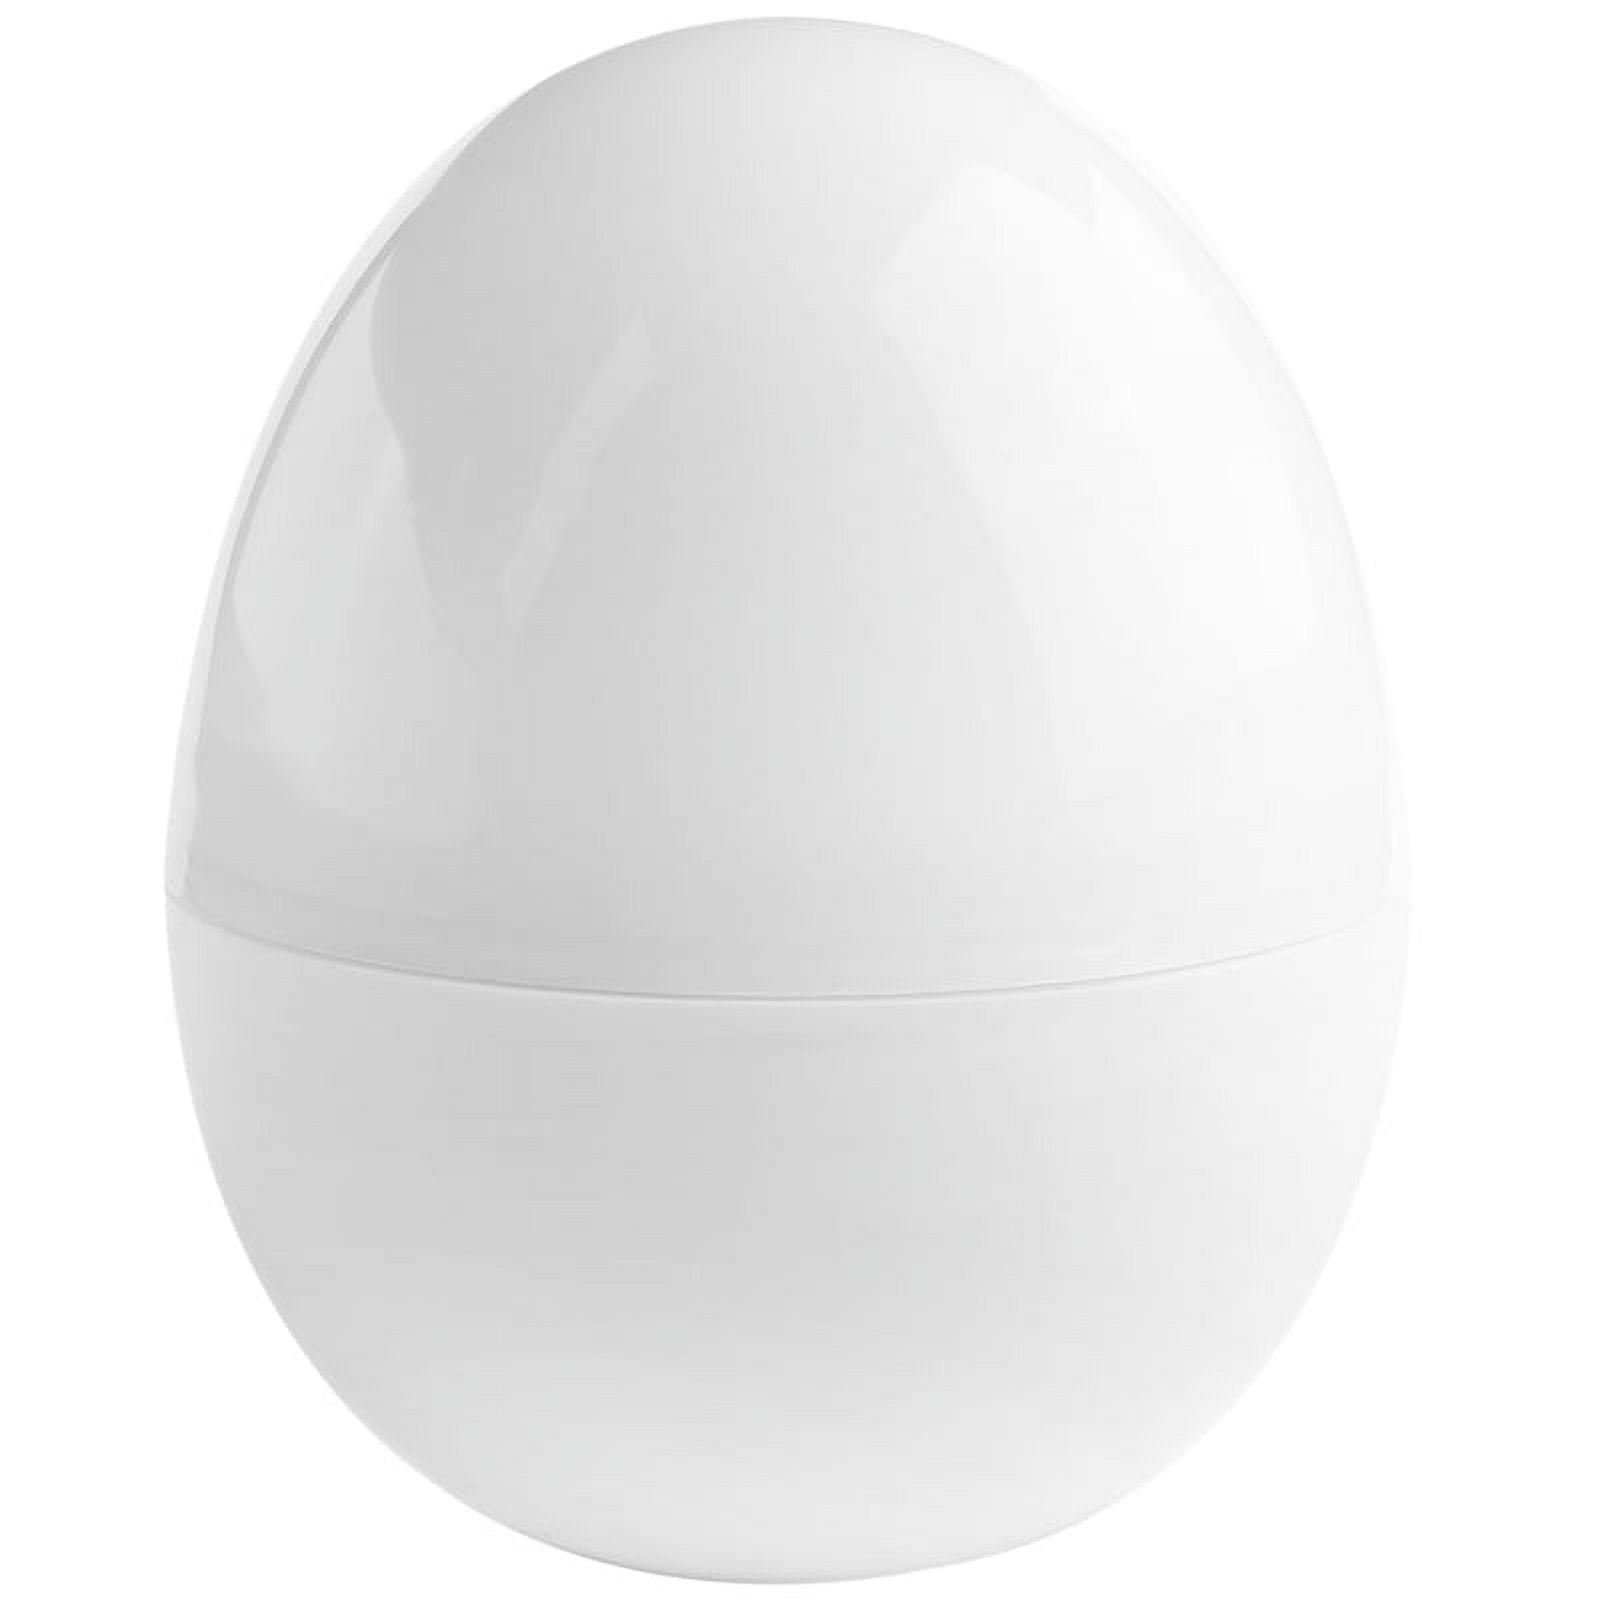 OXO Good Grips Microwave Egg Cooker in Red/White - Loft410